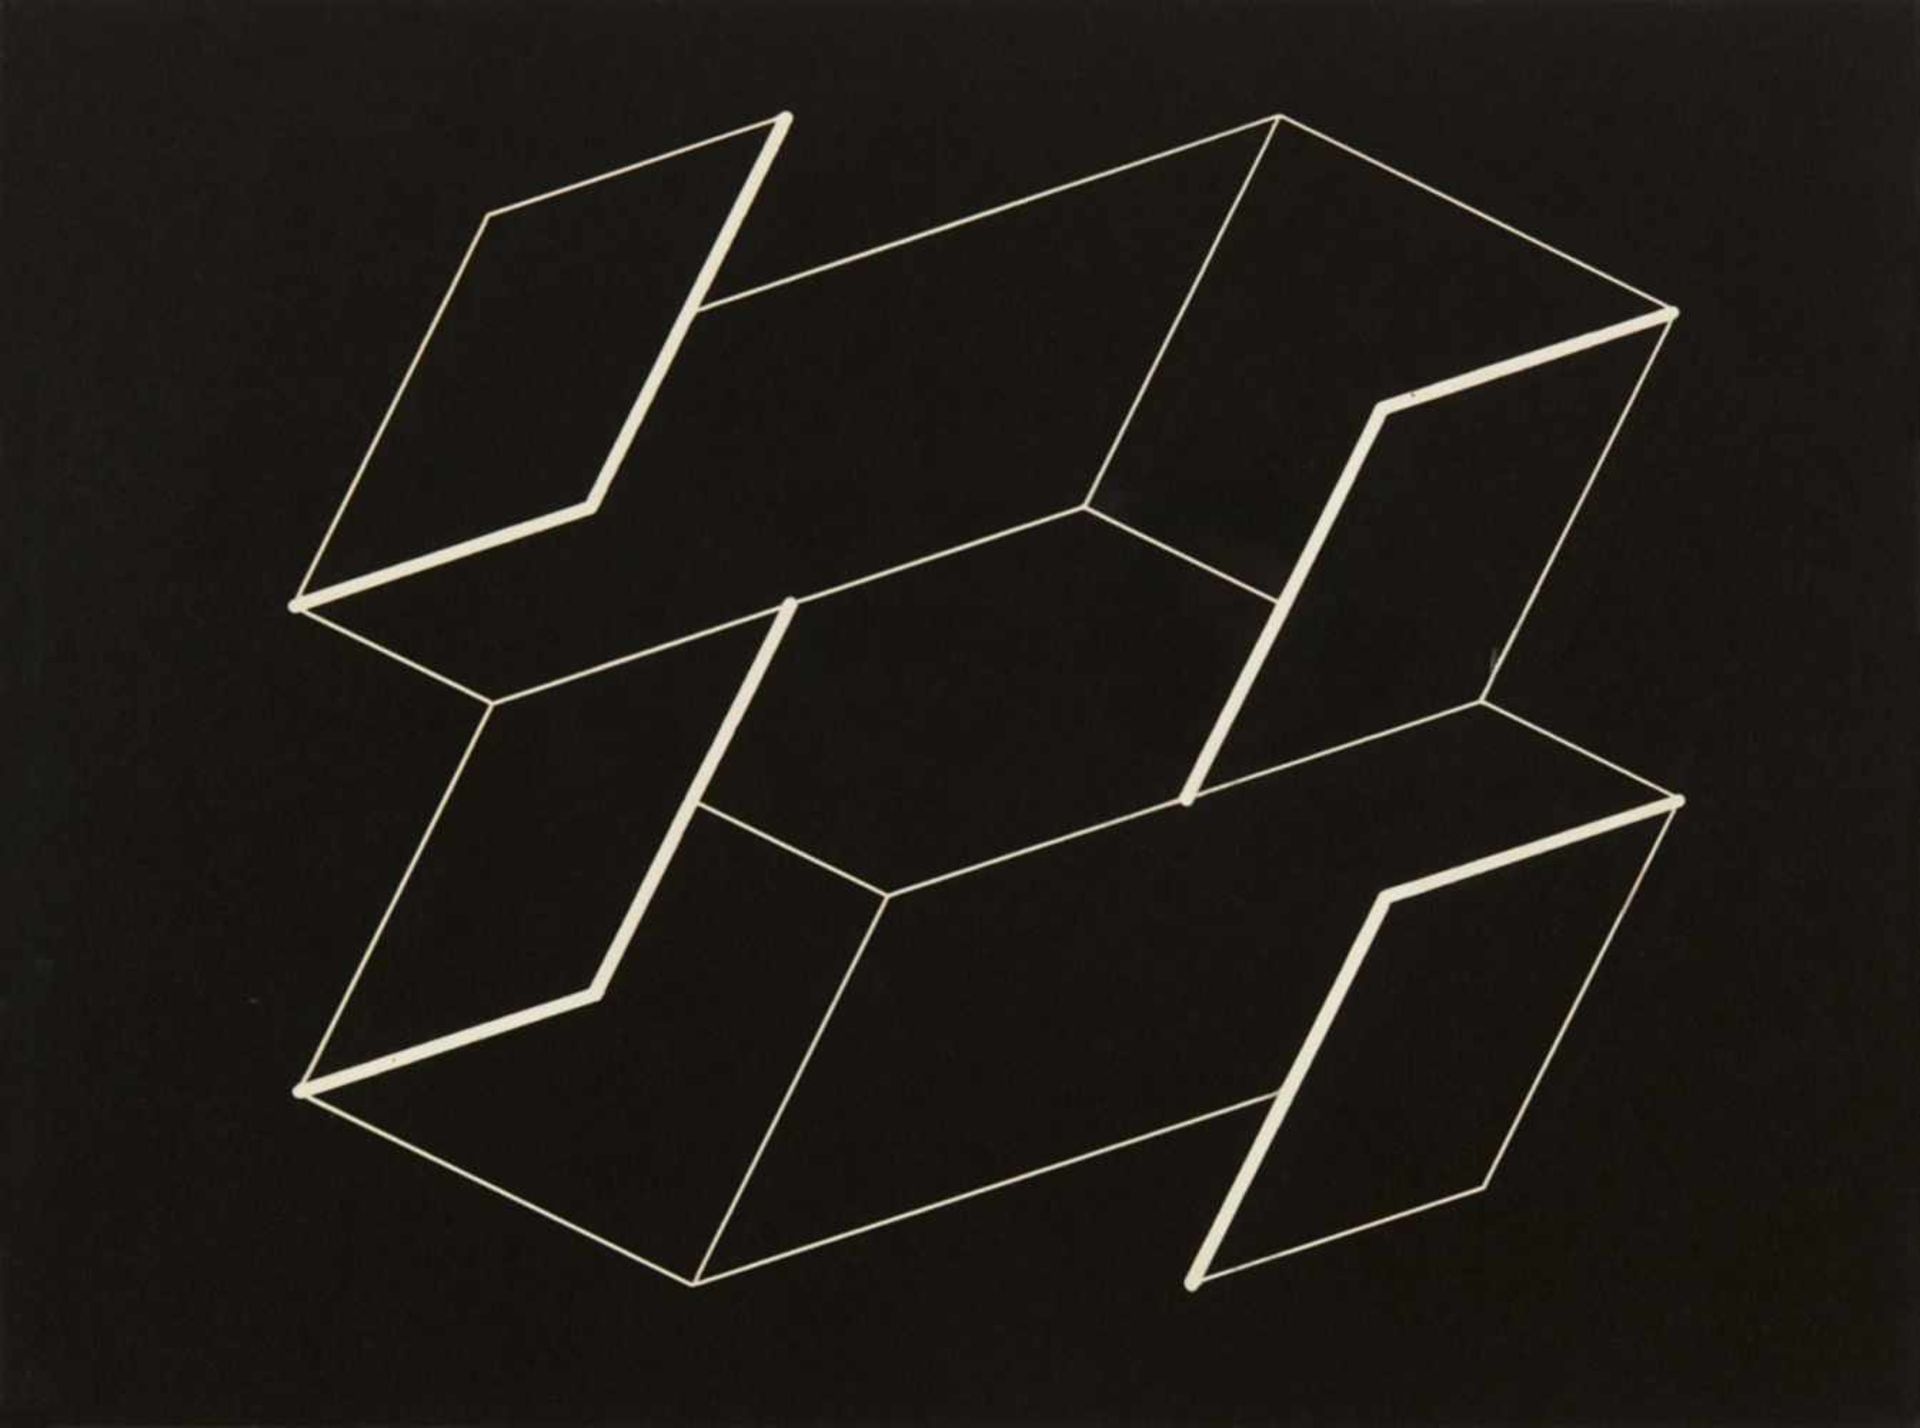 Josef AlbersUntitled (Structural Constellation U-7)